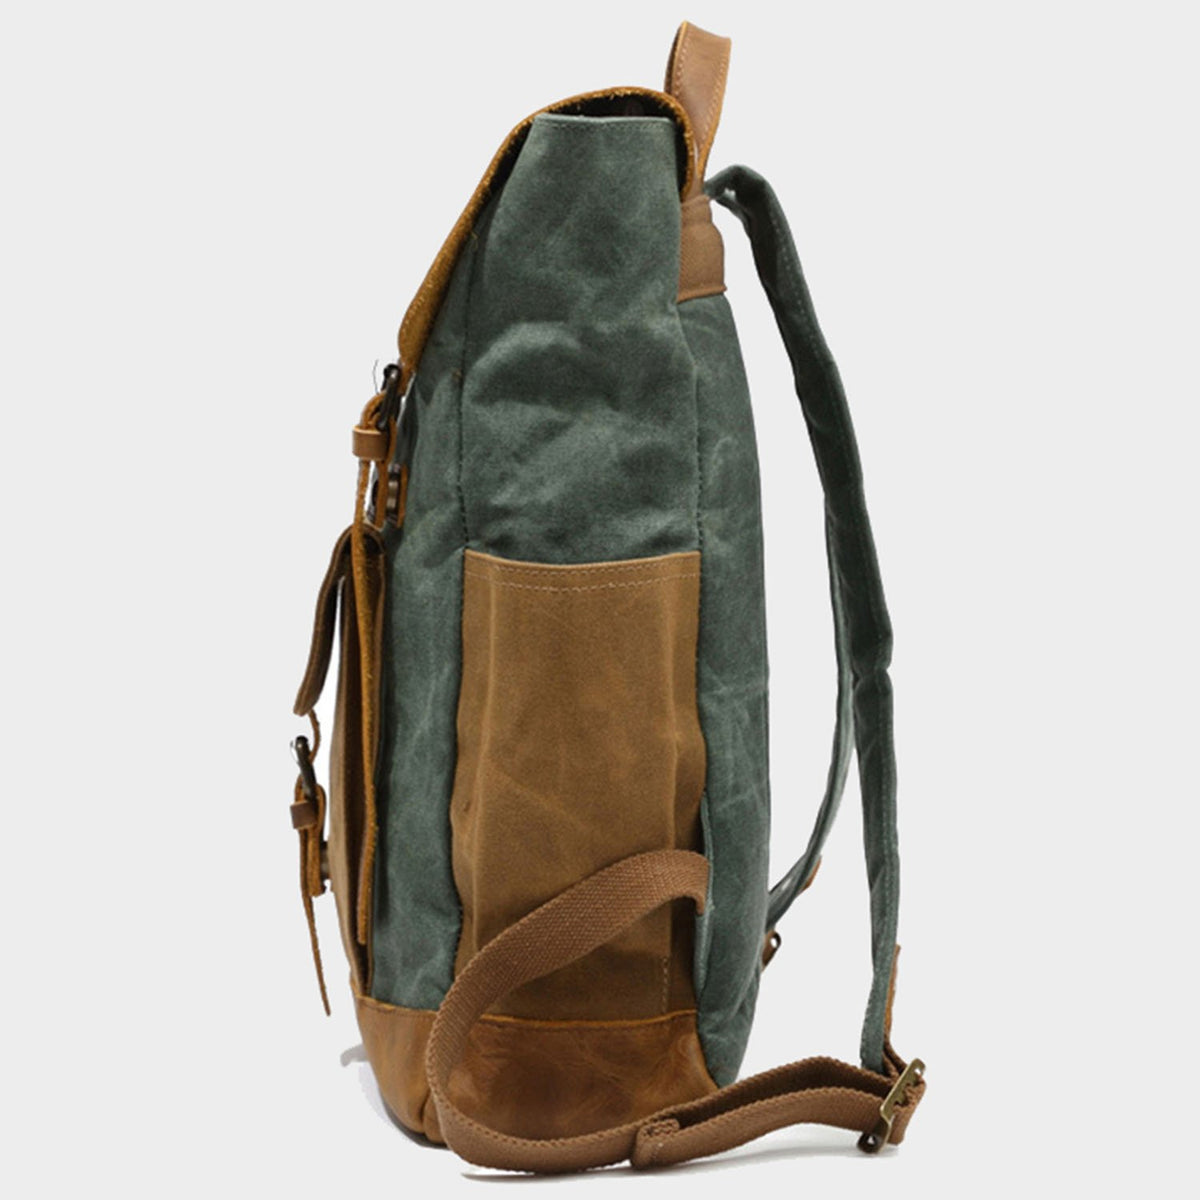 Vintage Style Unisex Canvas & Leather Rucksack Backpack 14" - worthtryit.com